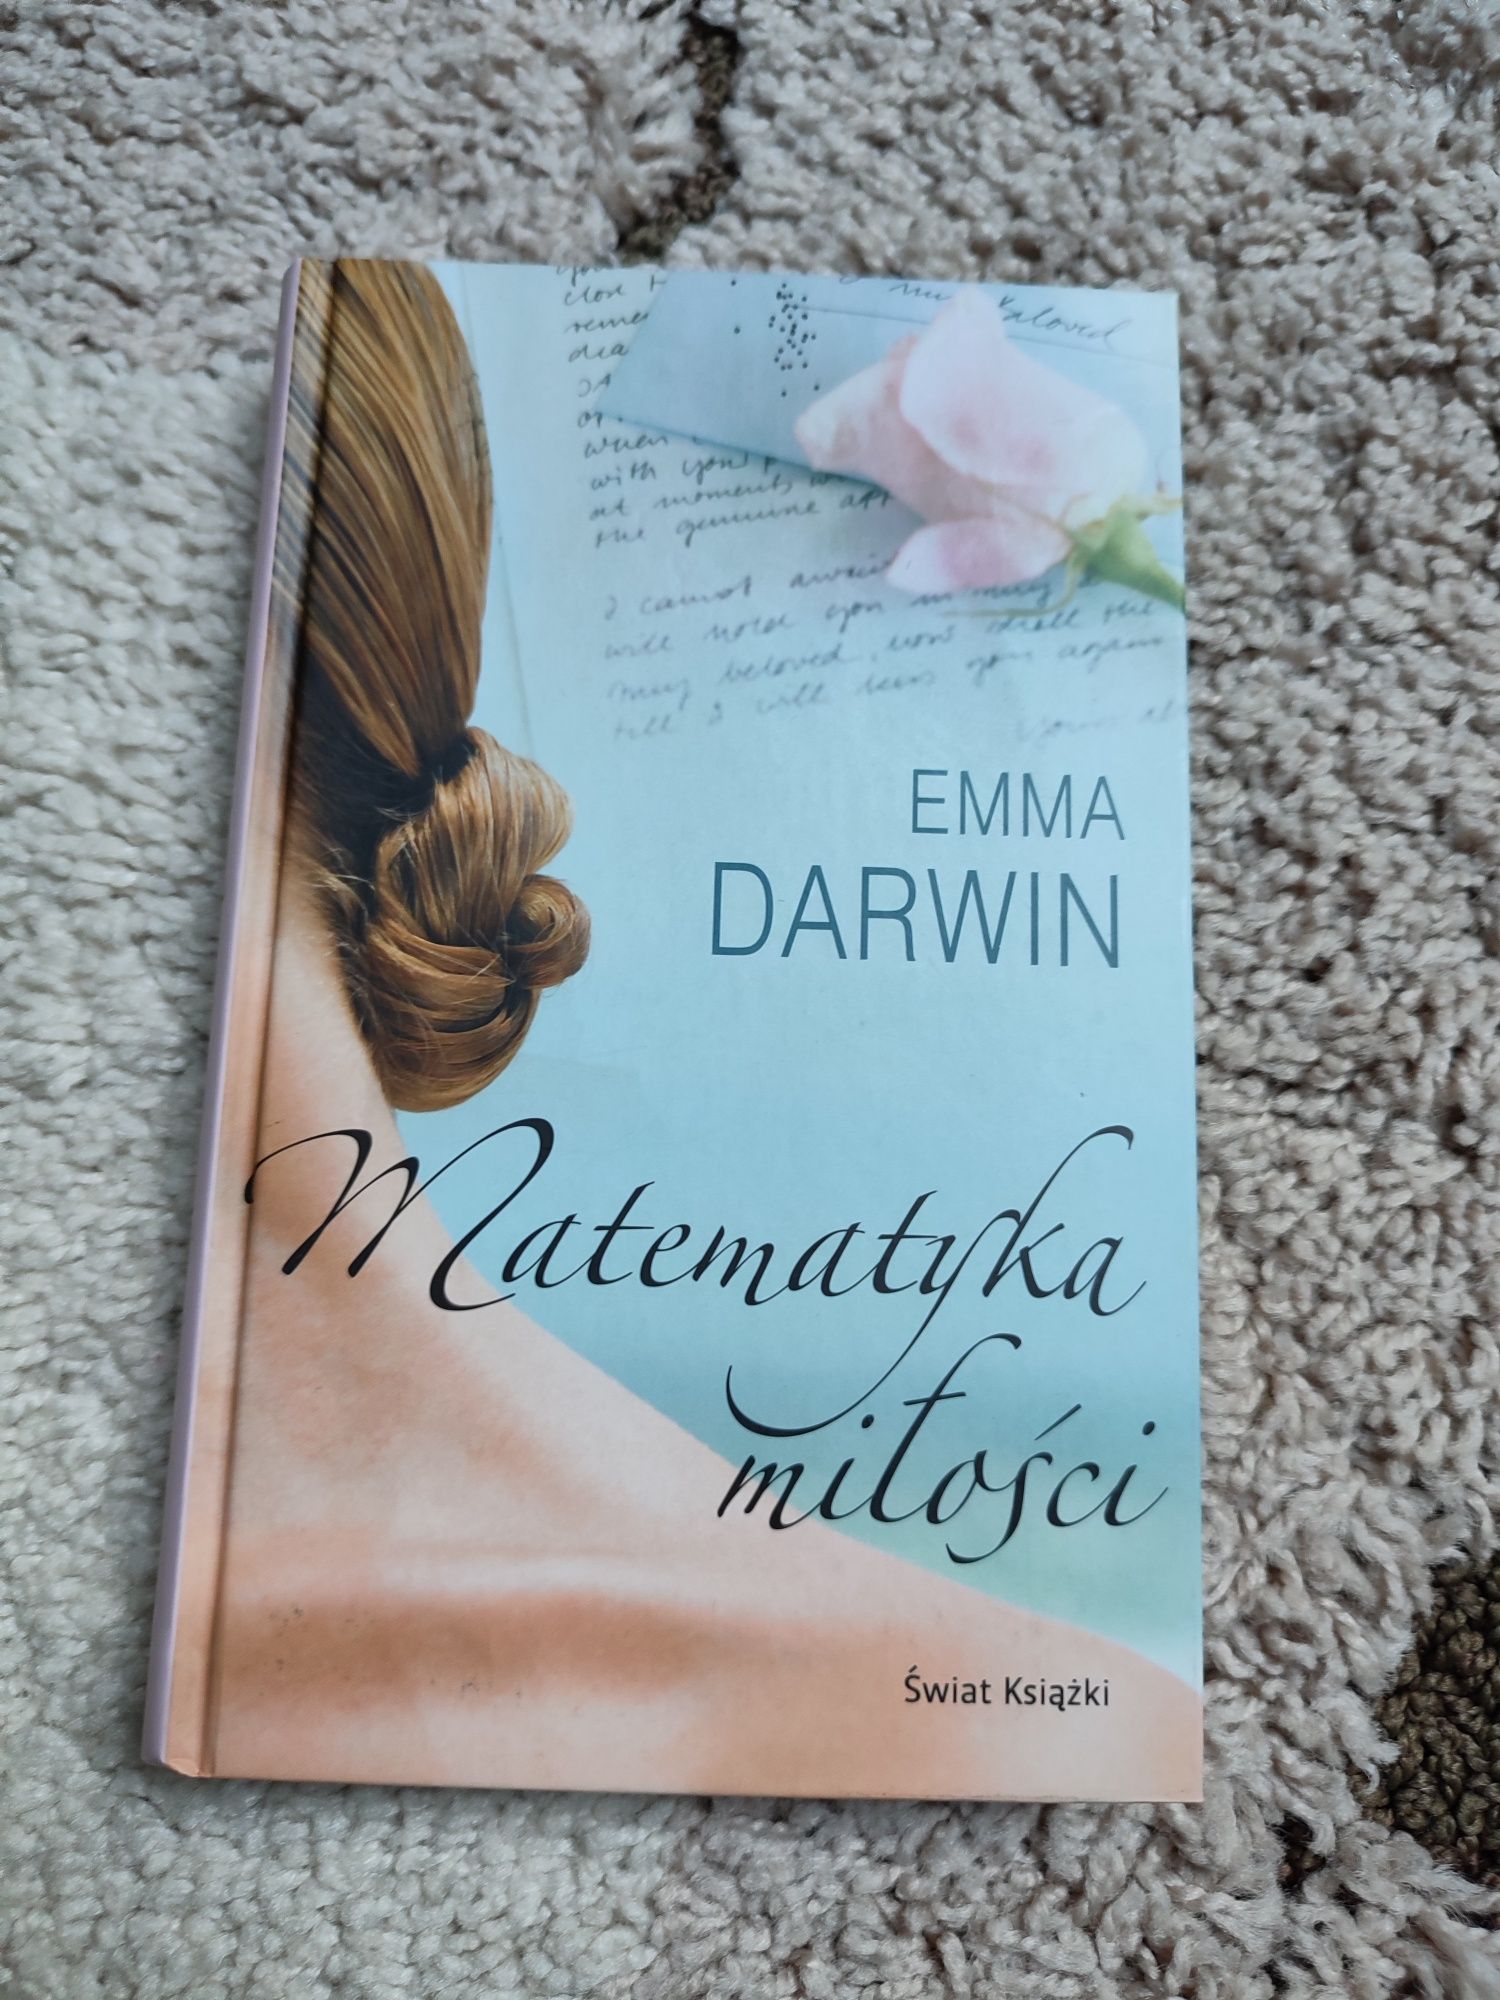 Emma Darwin "Matematyka miłości"